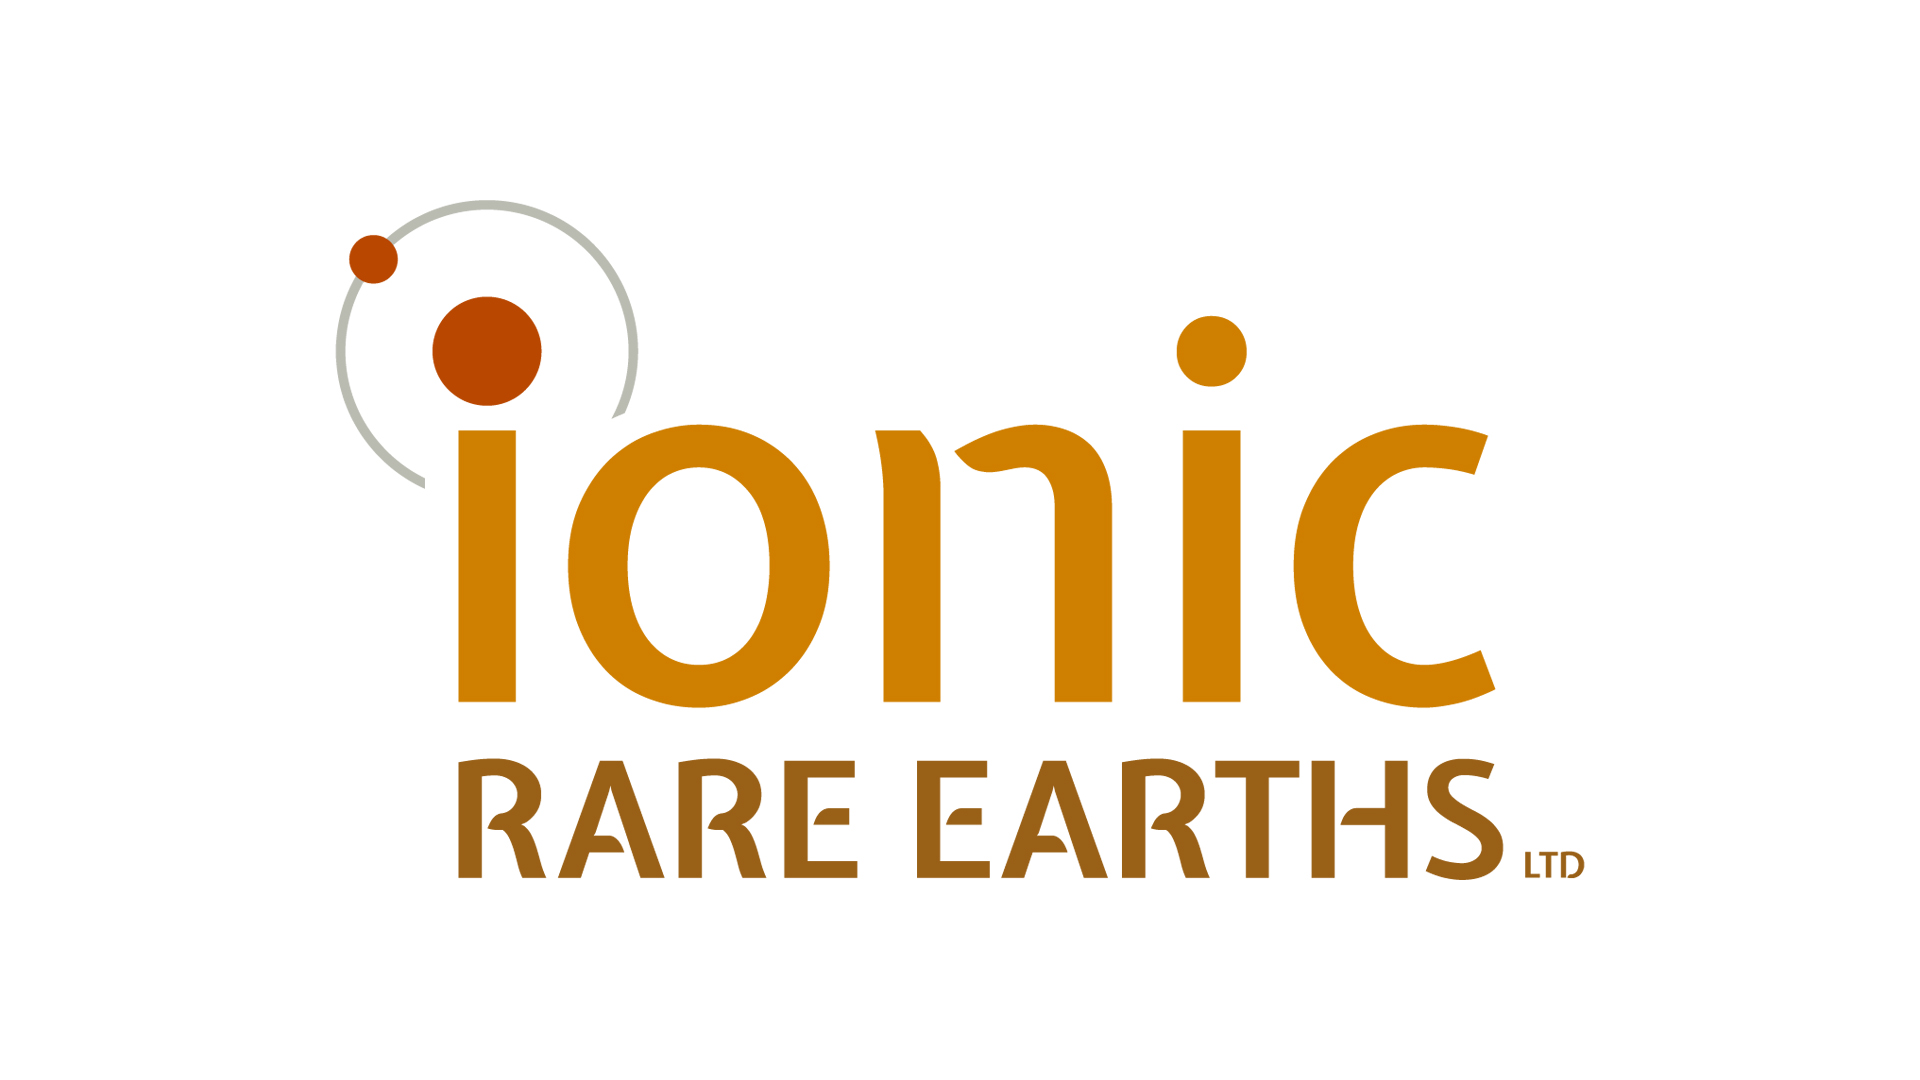 Iconic Rare Earths